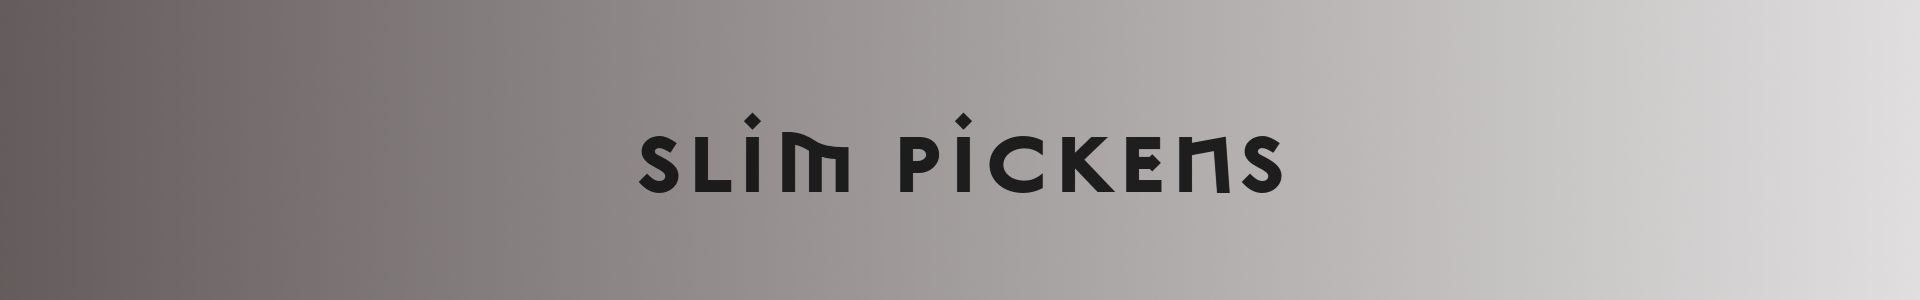 Slim Pickins Jekyll Theme banner image